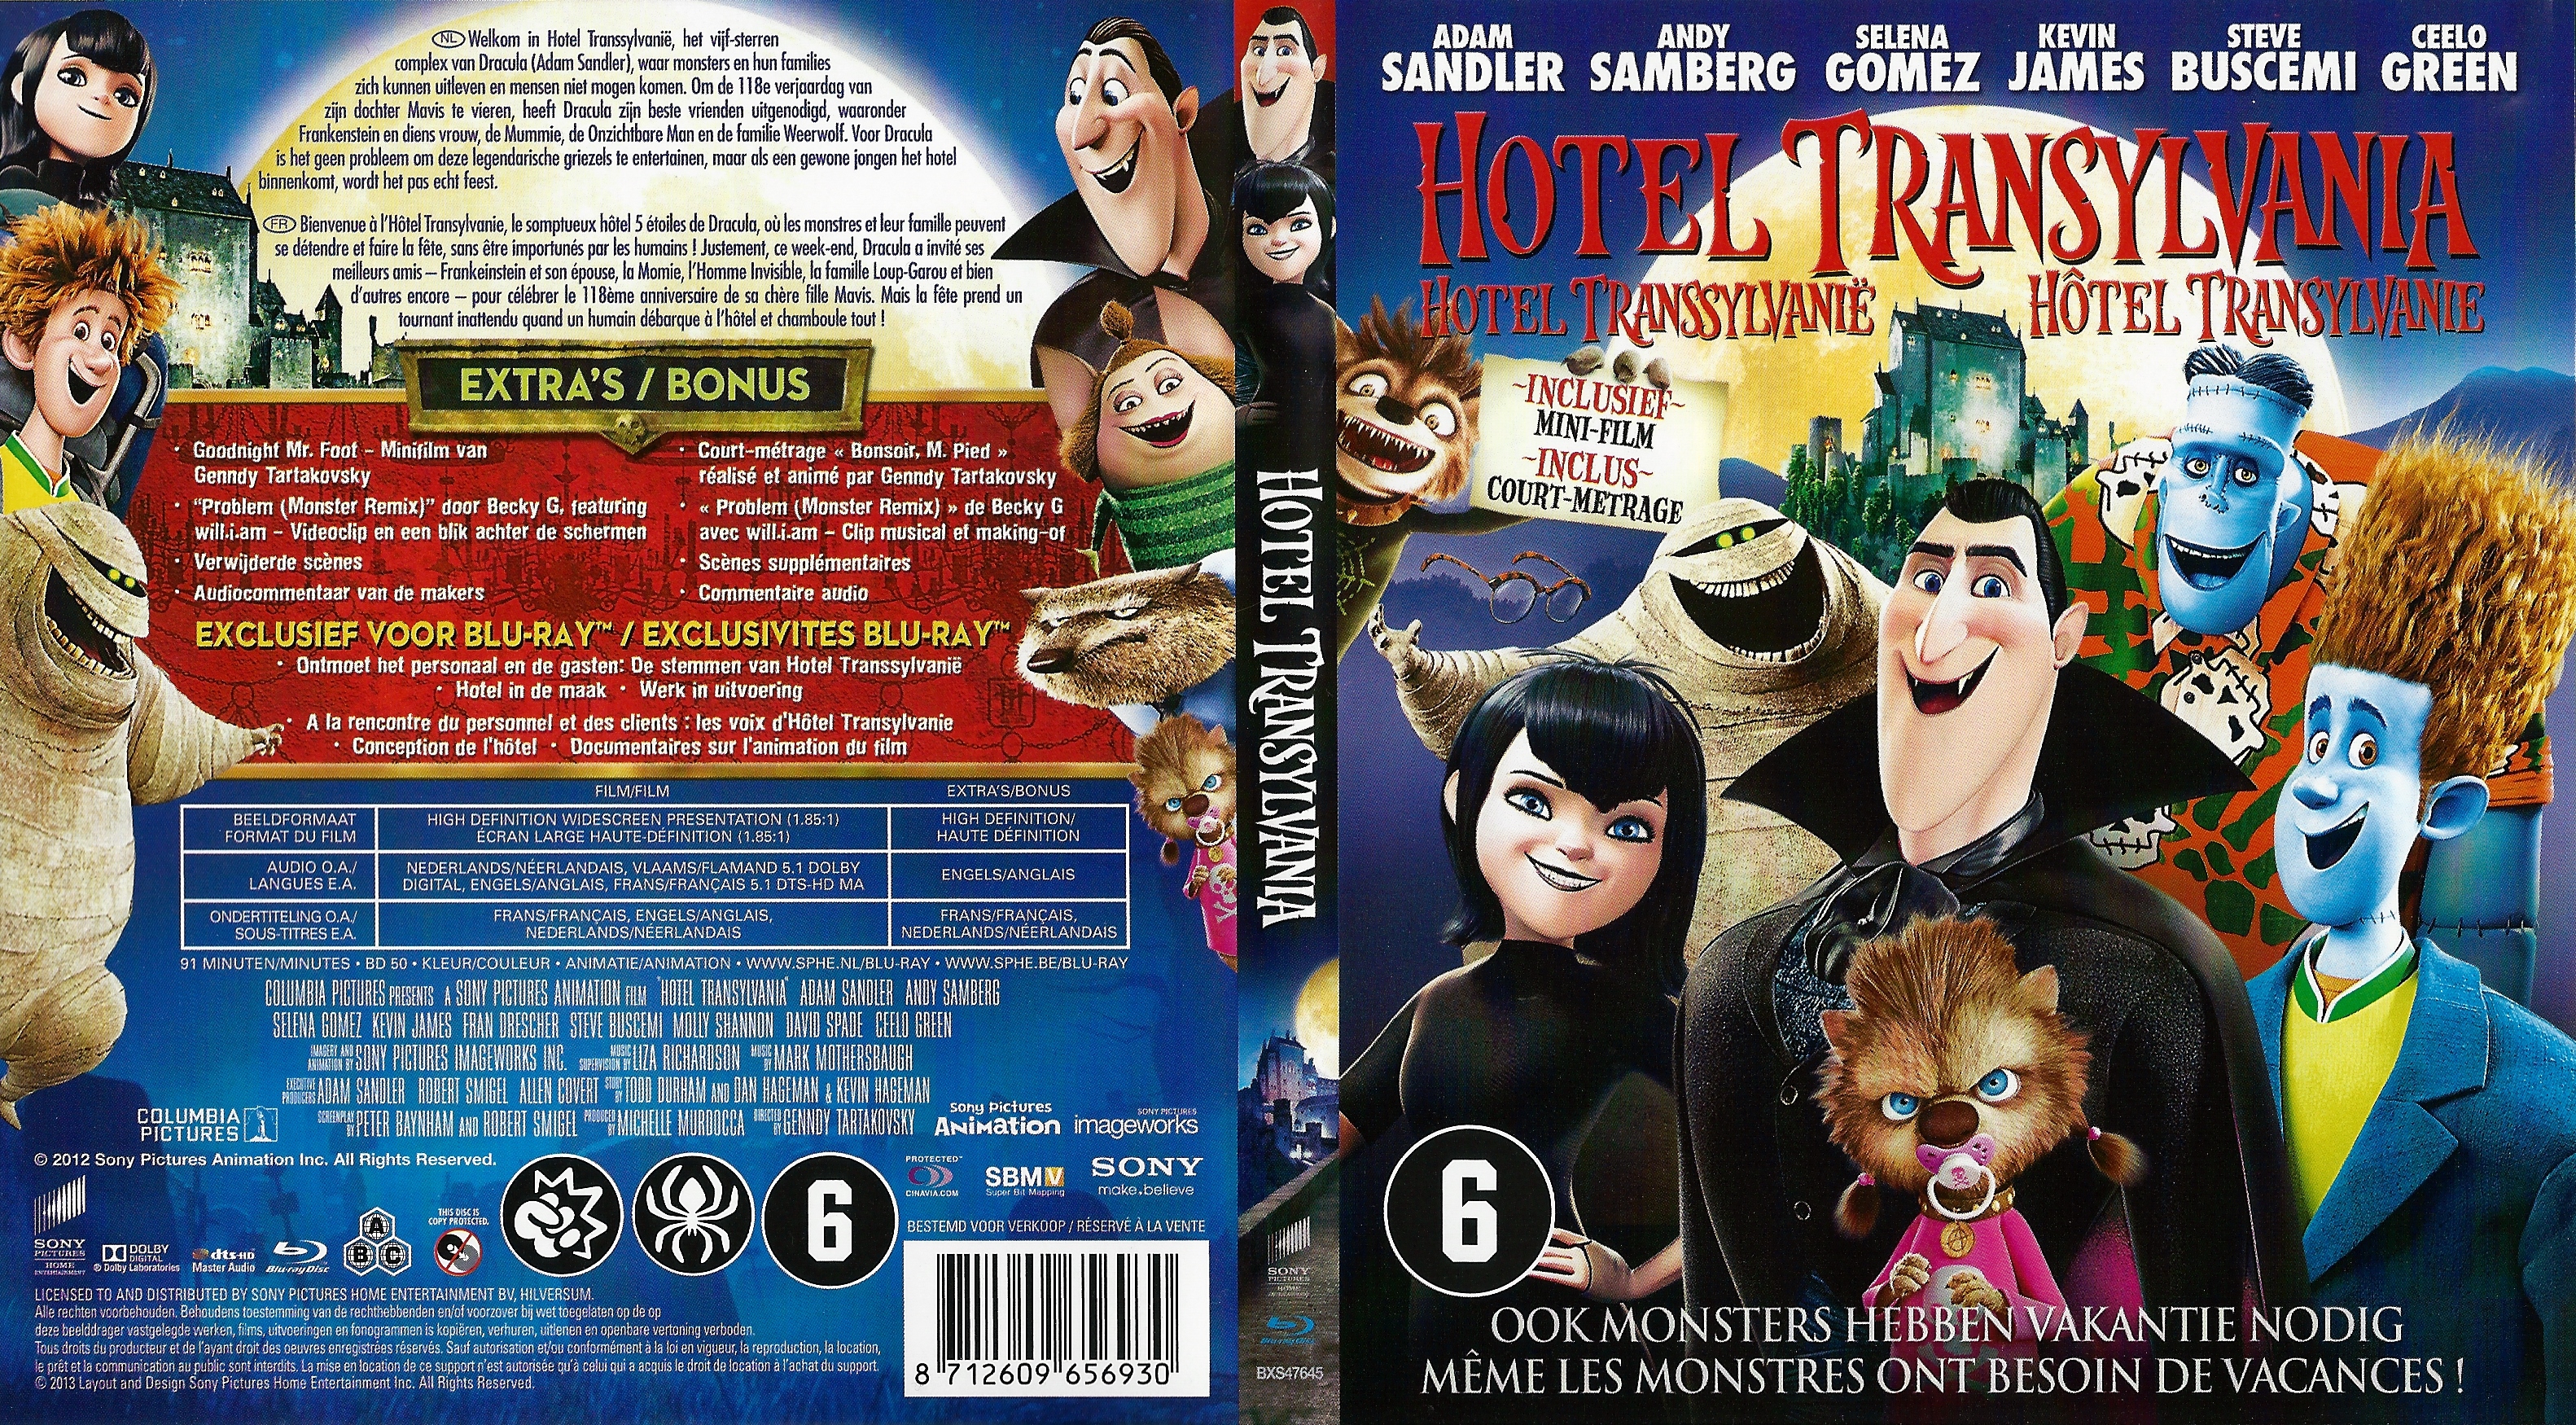 Jaquette DVD Htel Transylvanie (BLU-RAY) v2